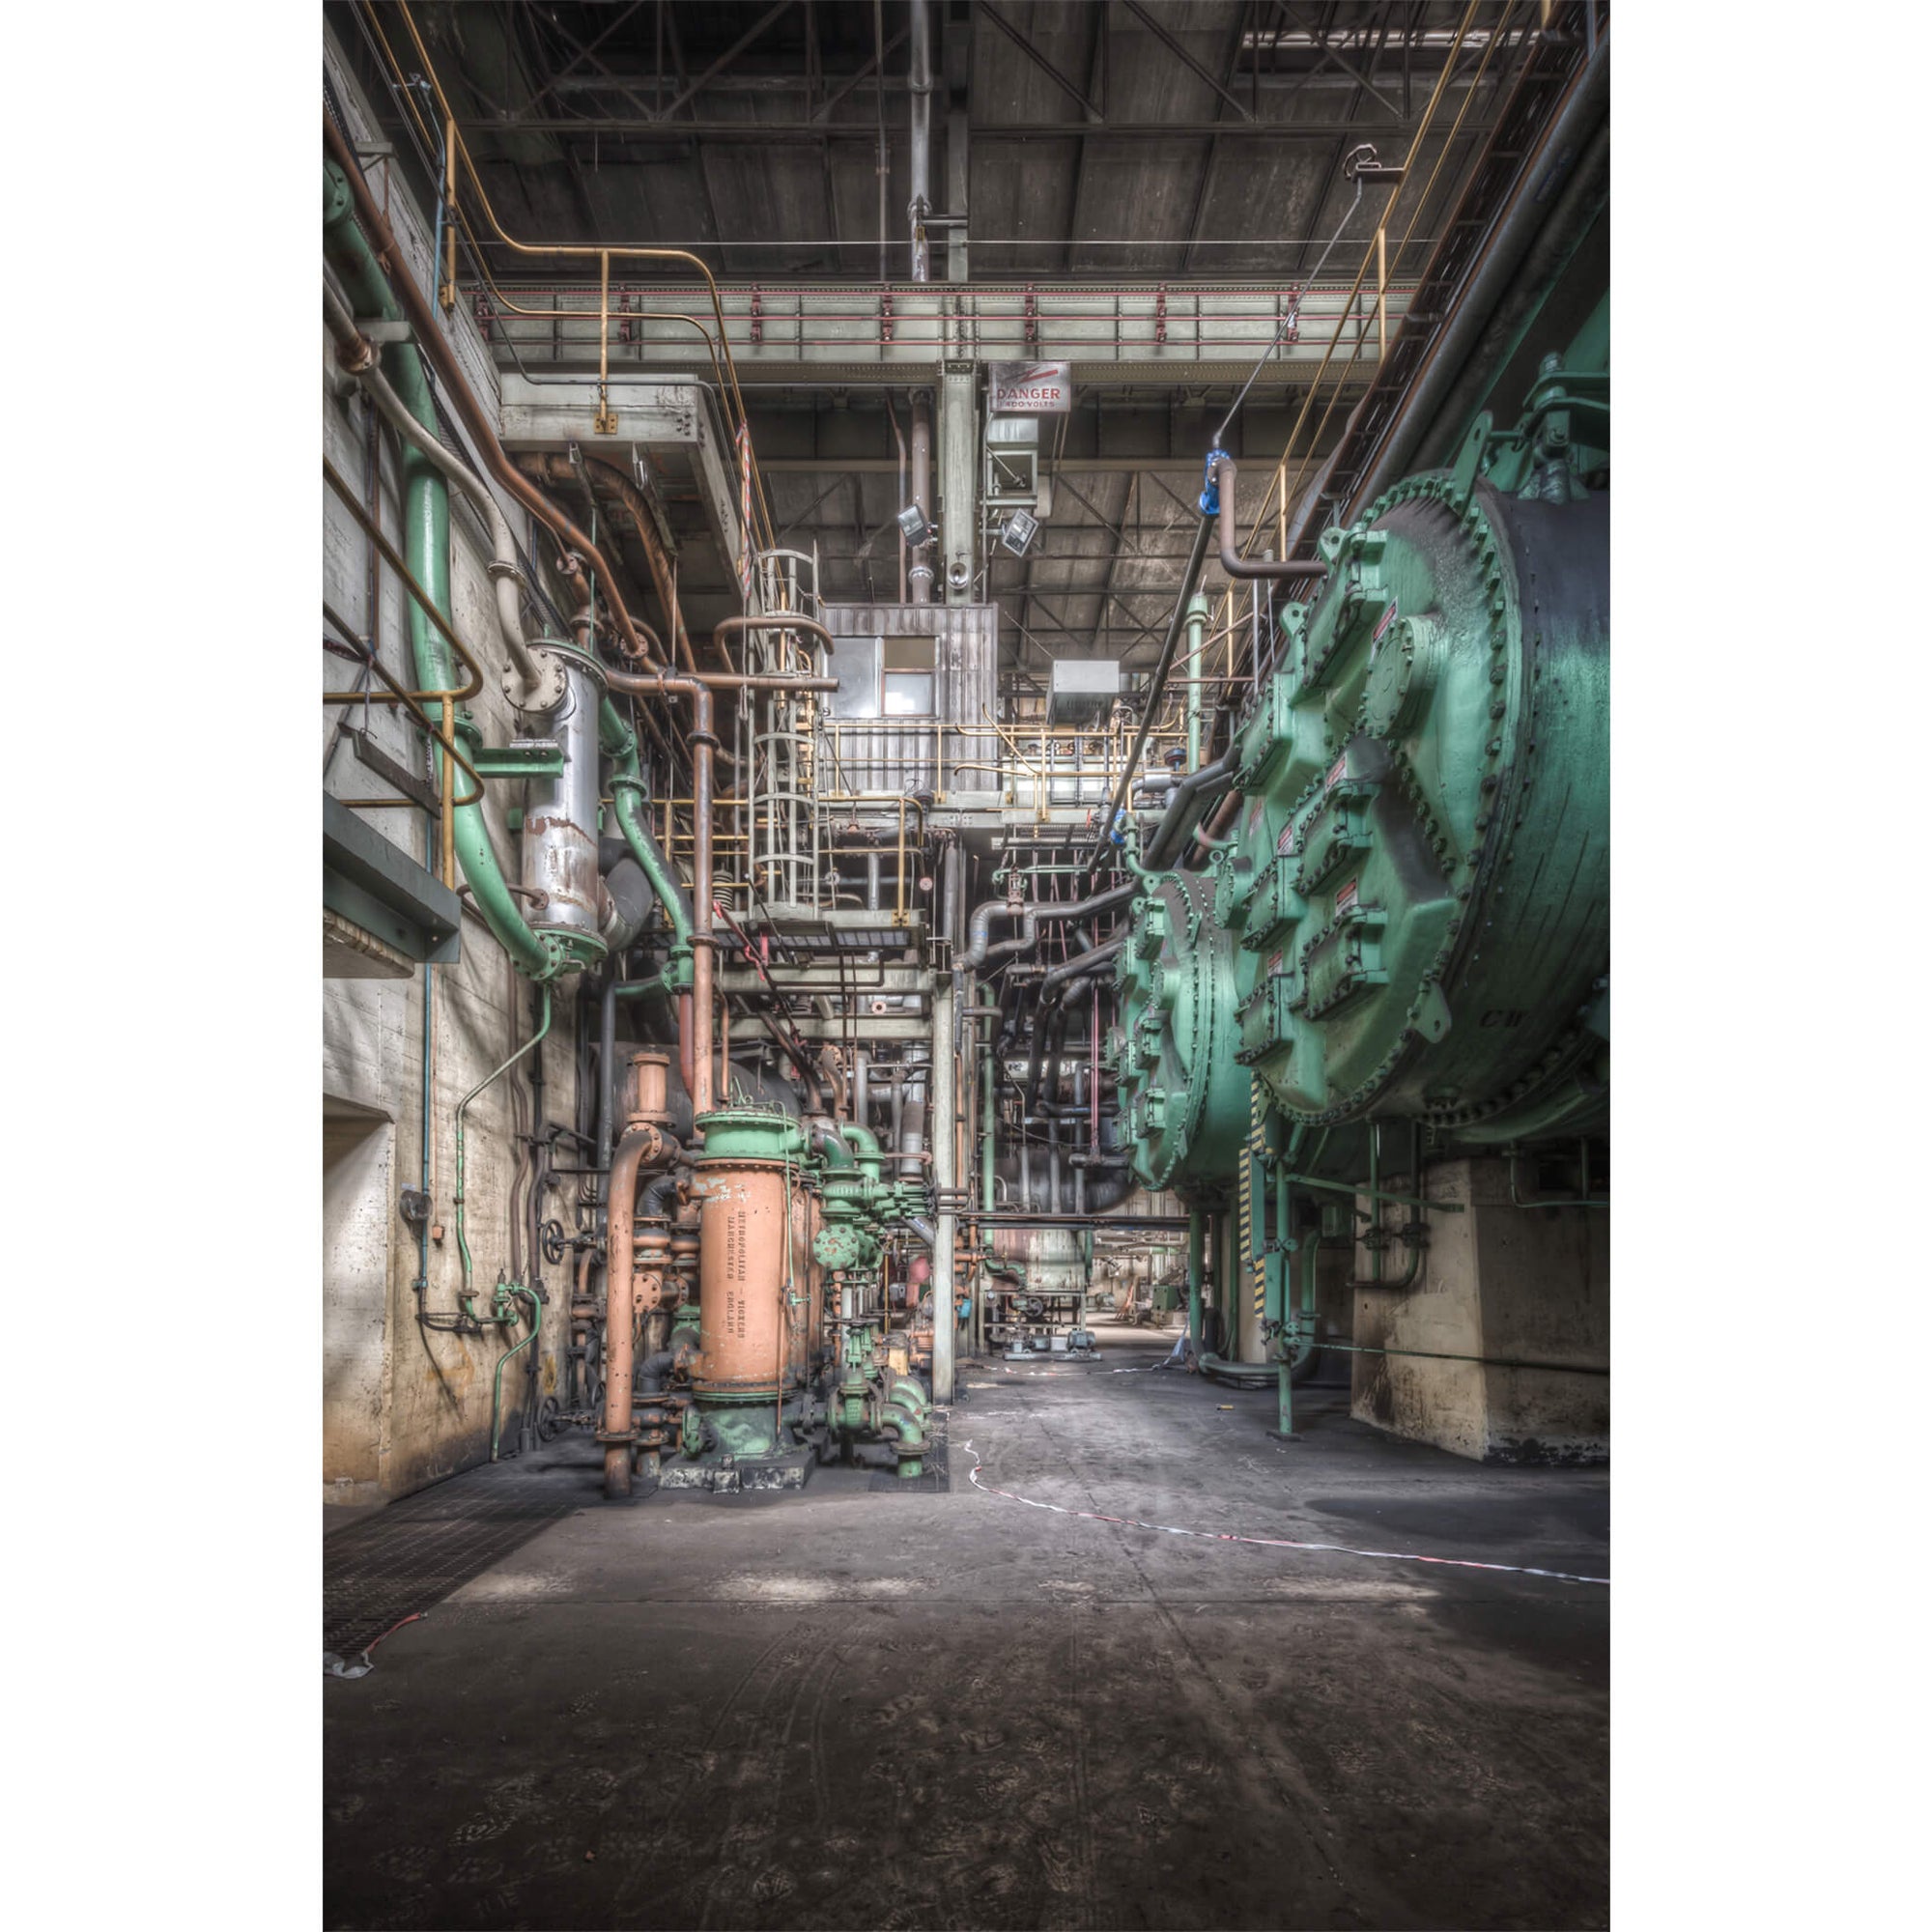 Condenser | Morwell Power Station